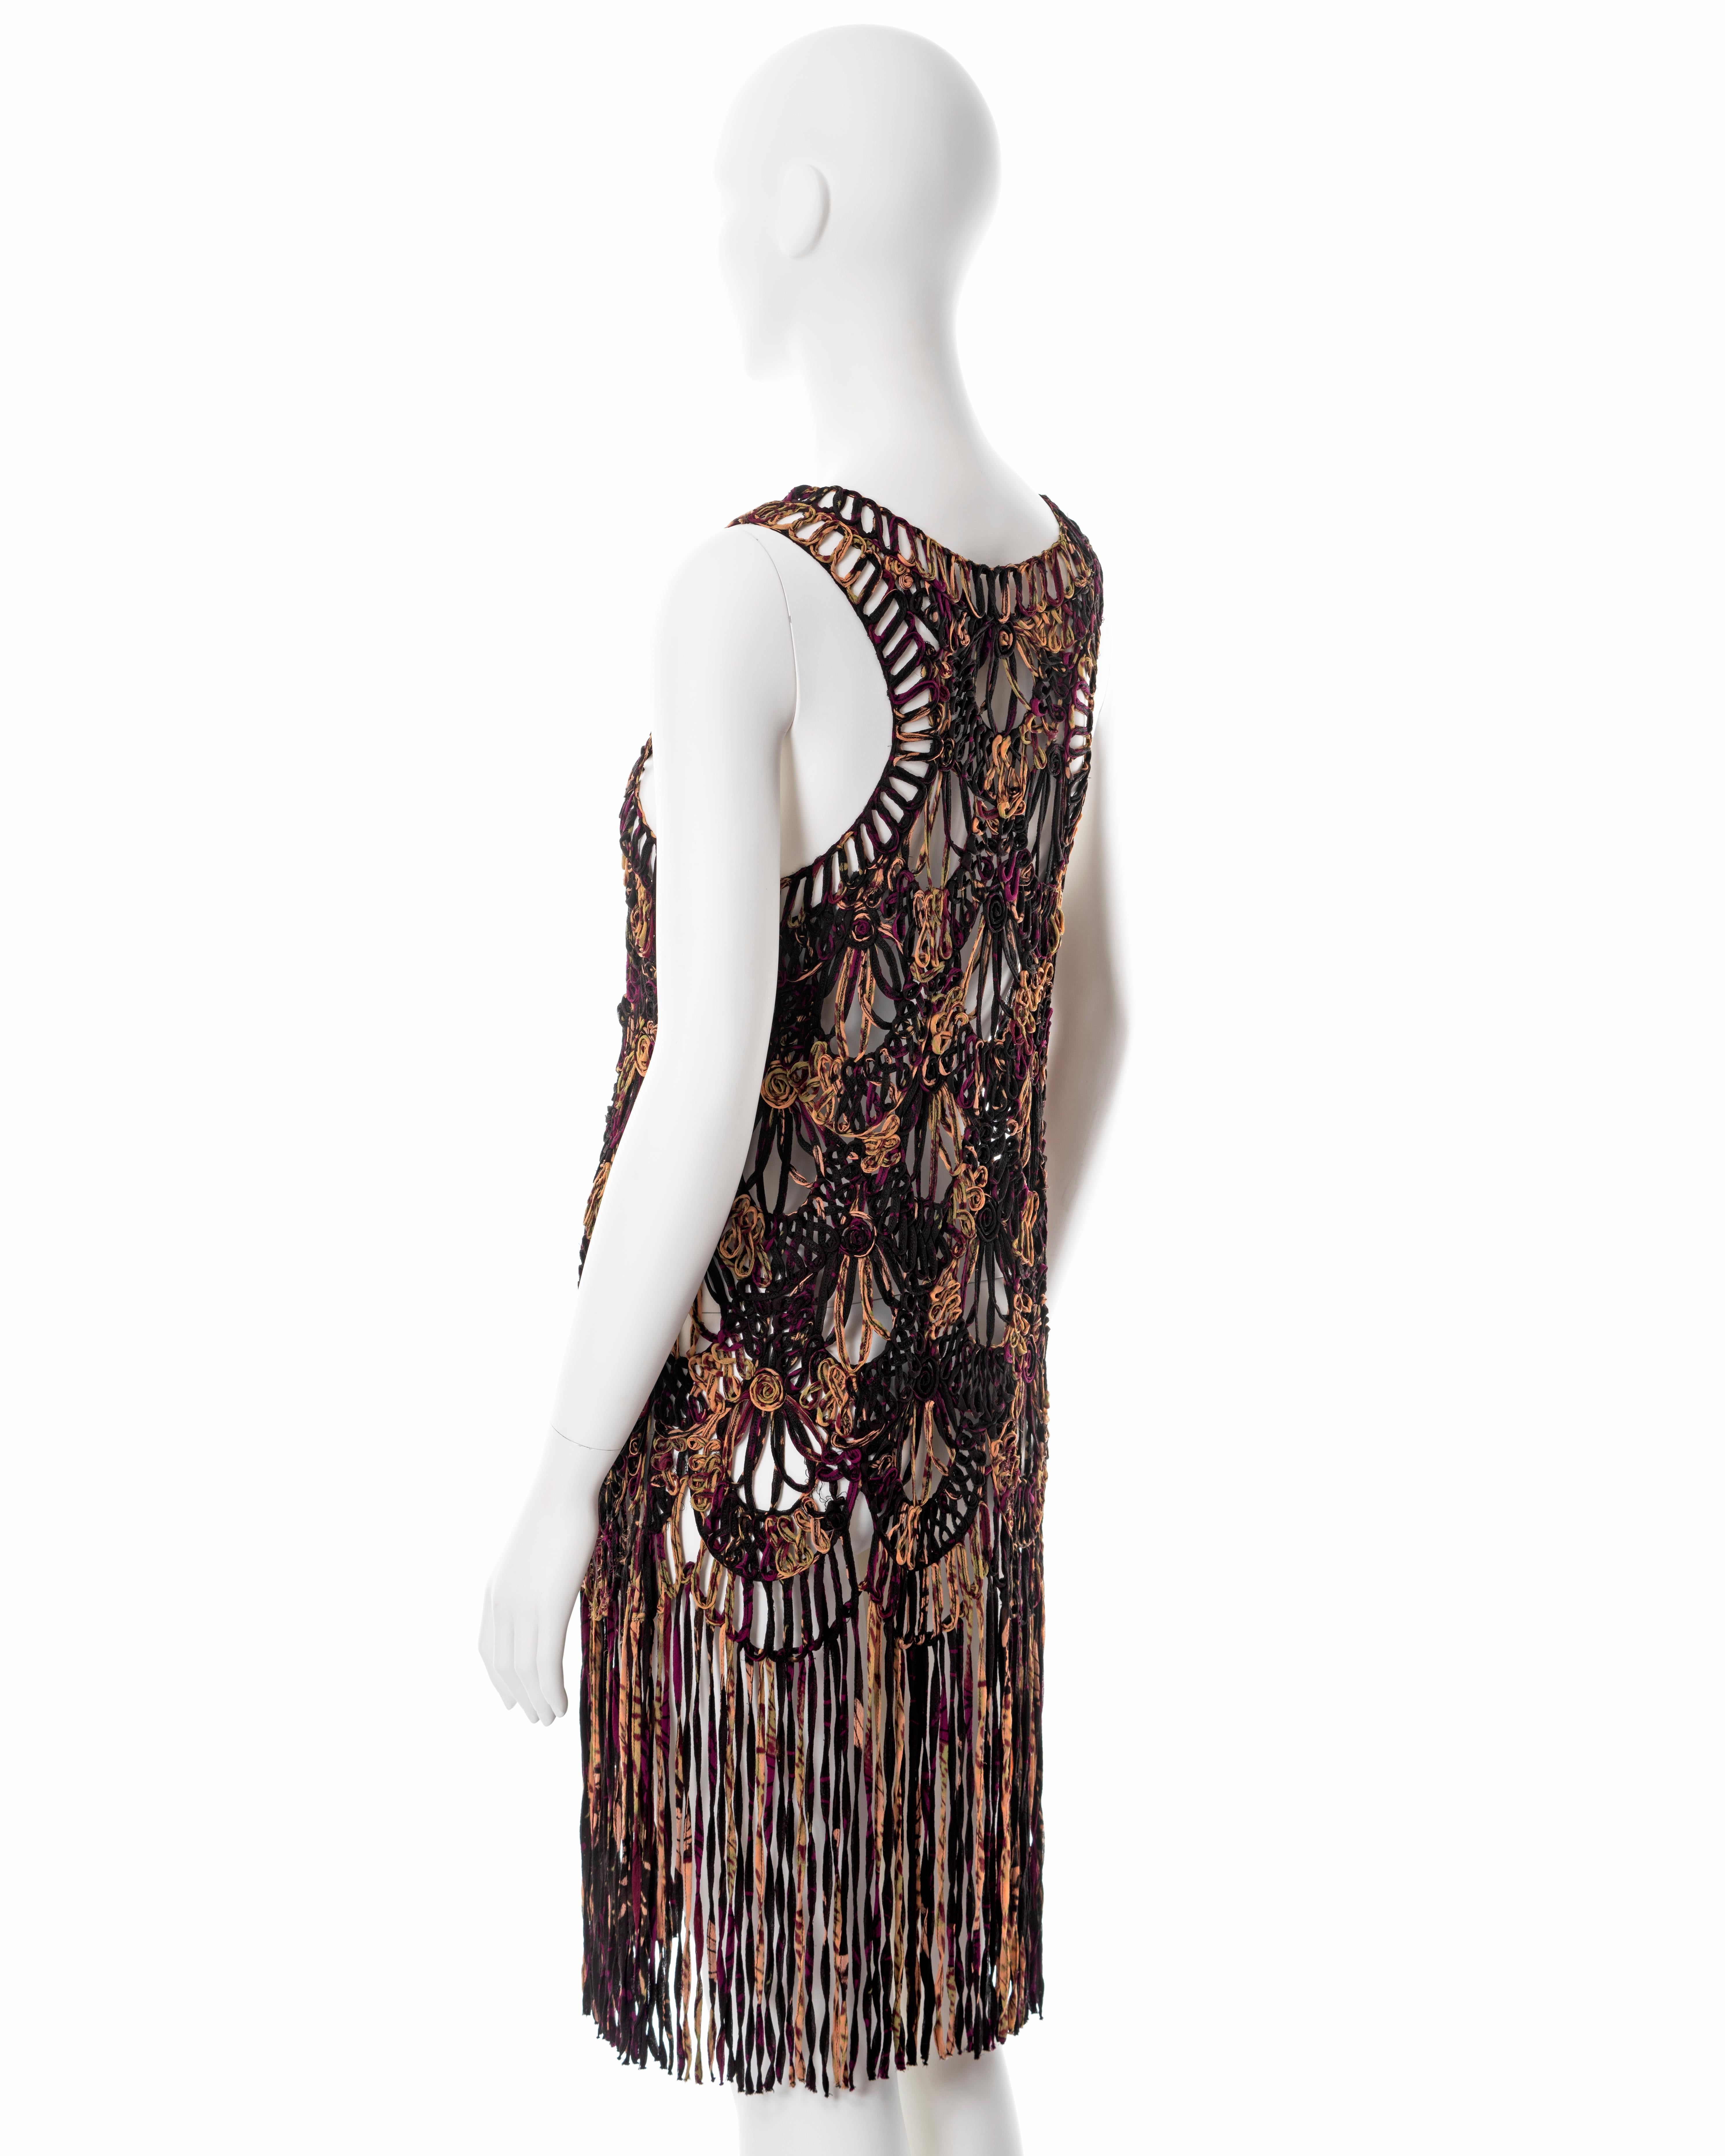 Jean Paul Gaultier fringed silk macramé dress, ss 2000 For Sale 1